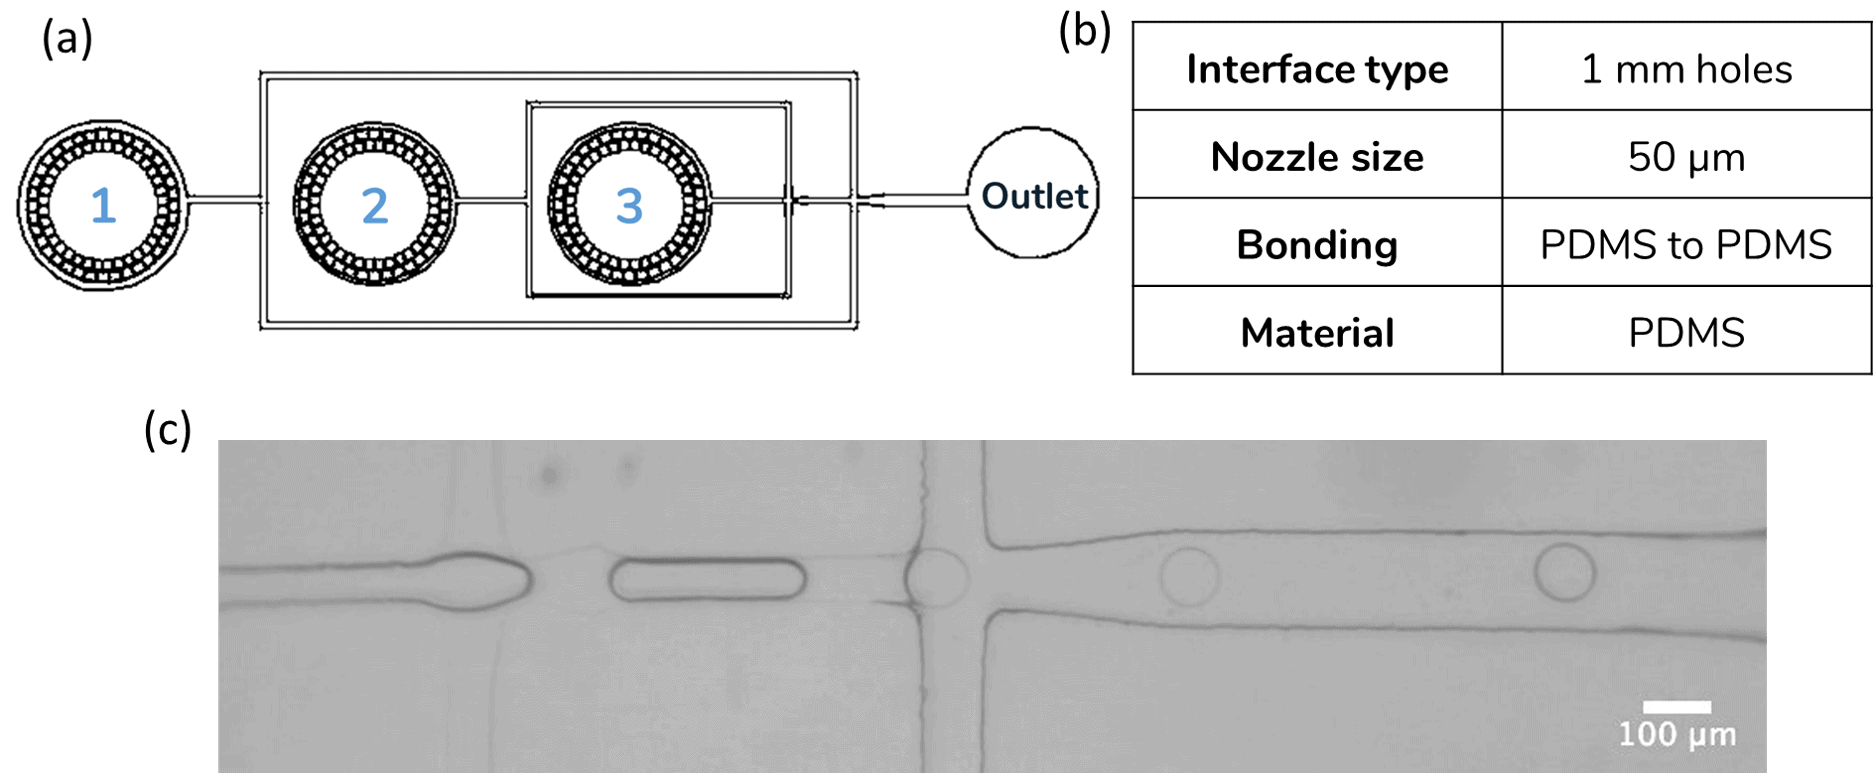 Overview of the Petit et al. microfluidic chip design for double emulsion